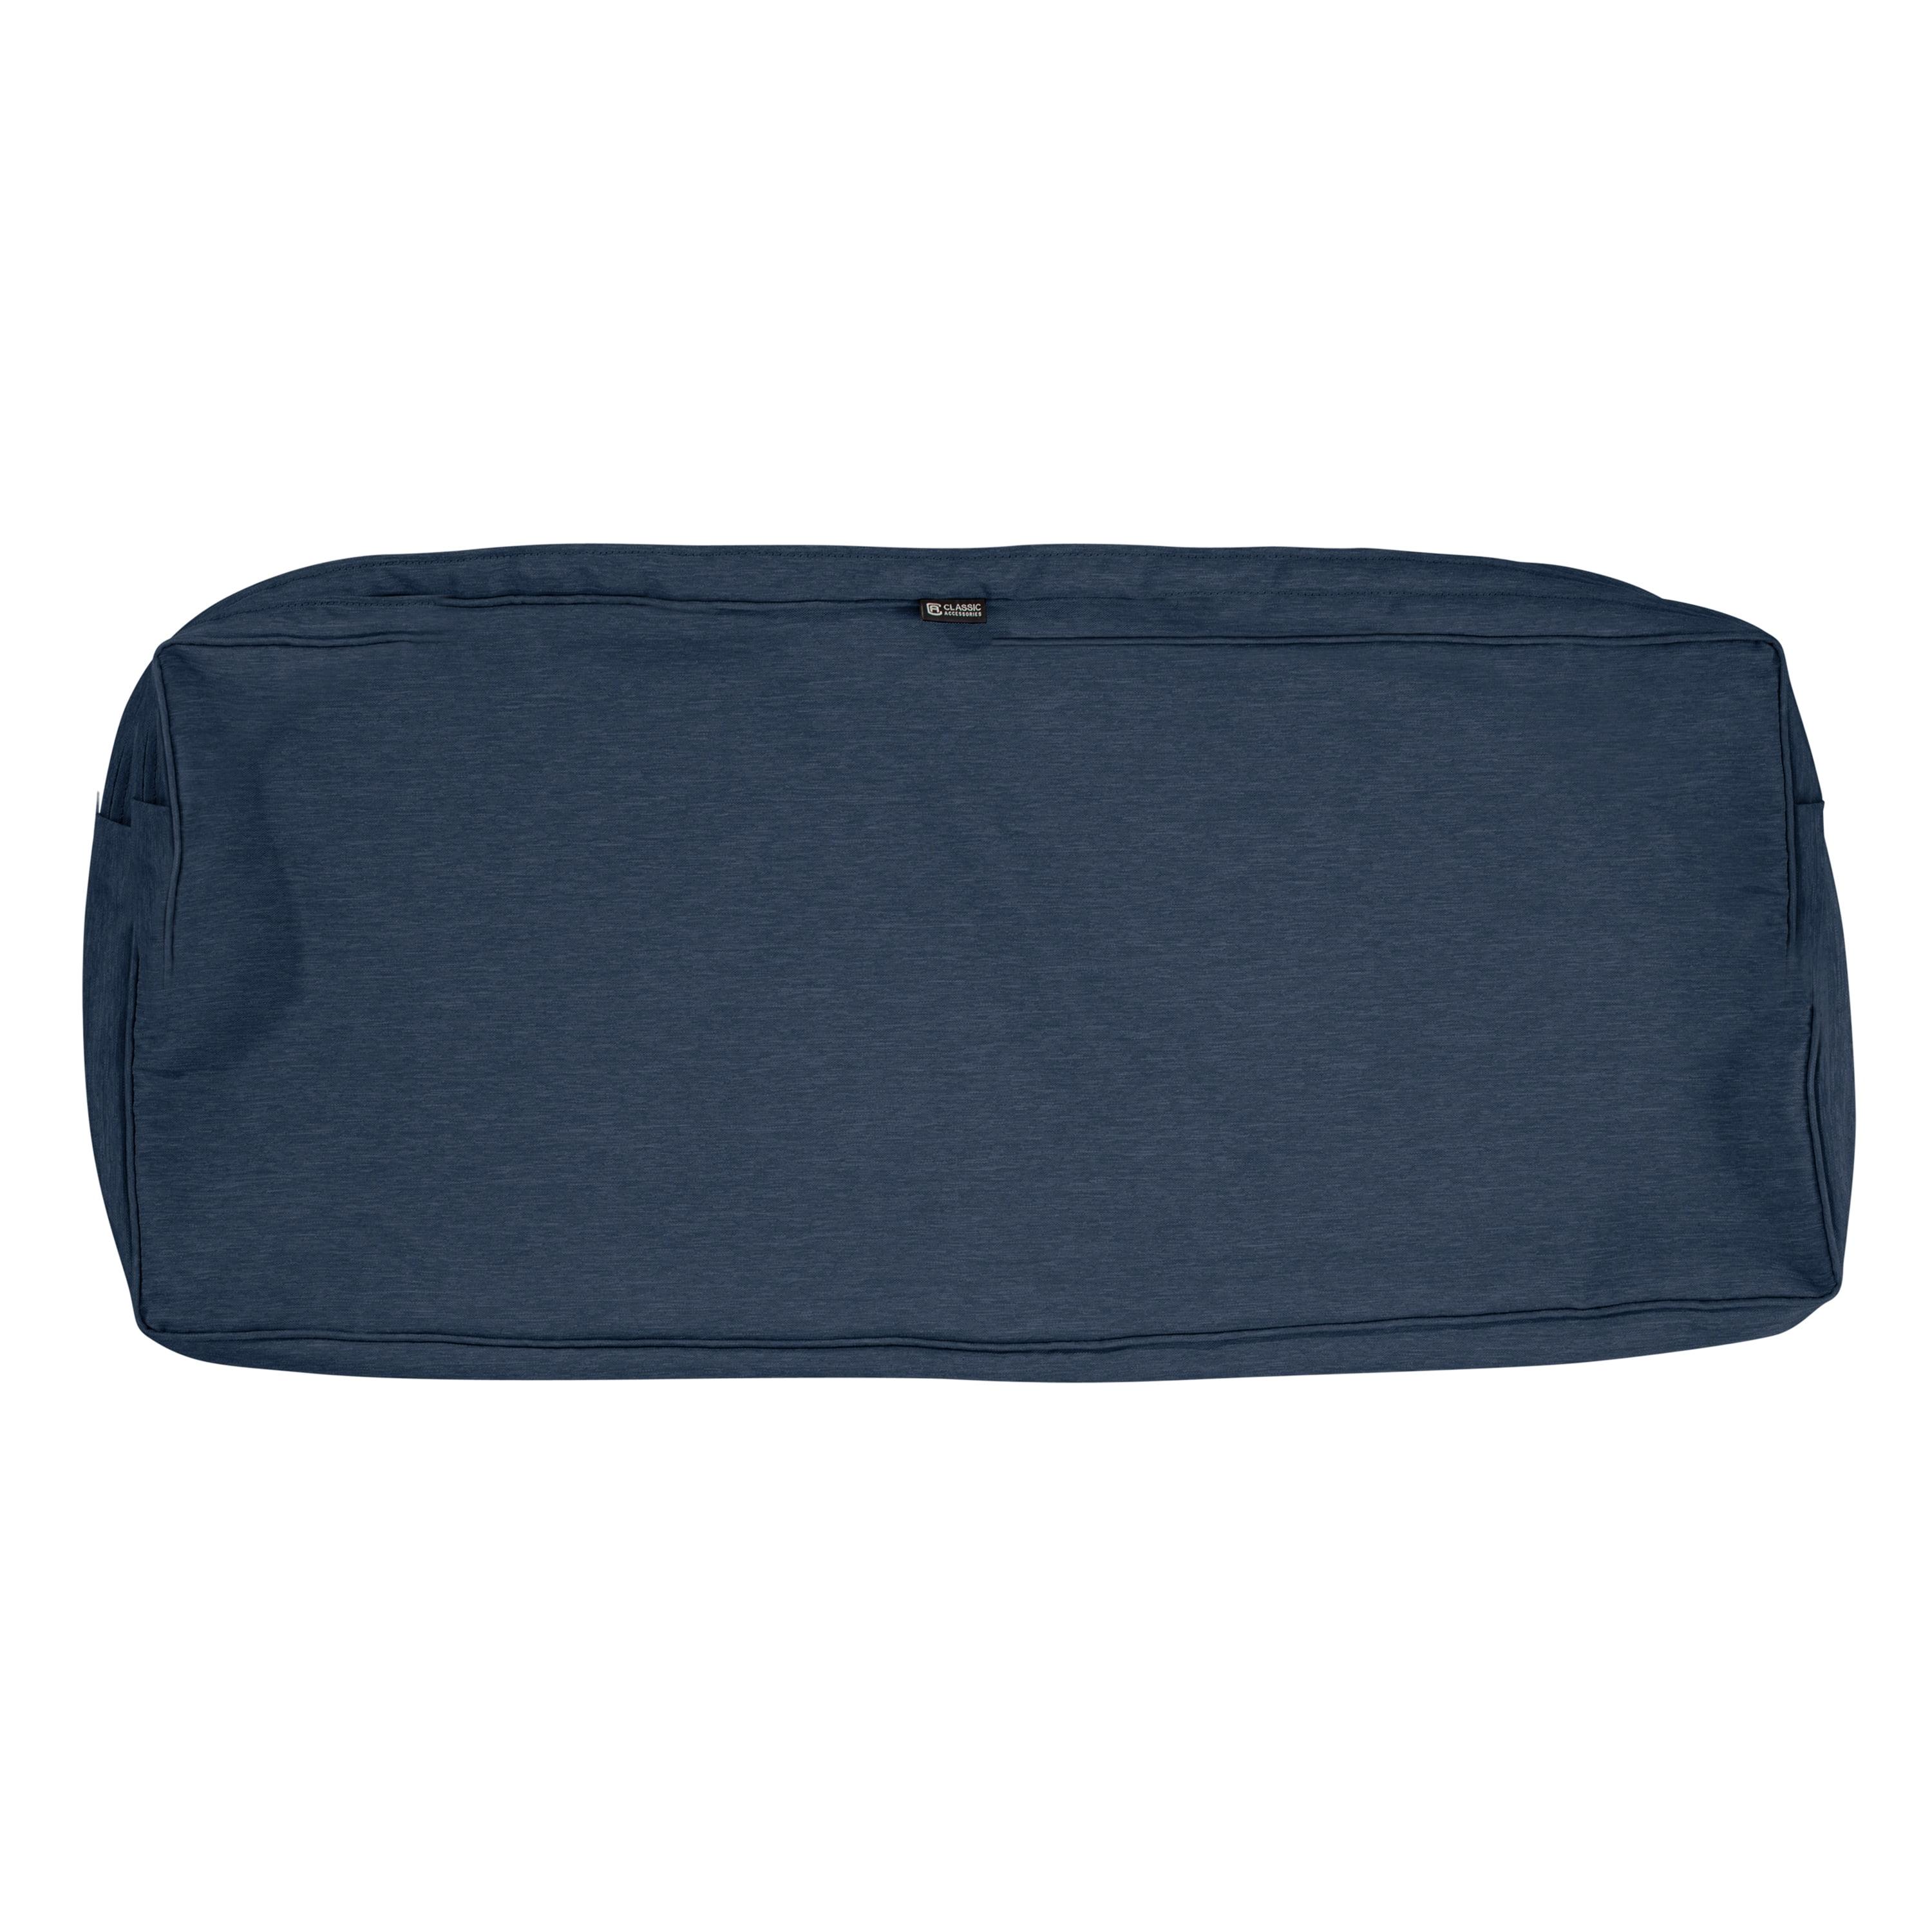 Heather Indigo Blue 54" Patio Bench/Settee Cushion Slip Cover - Montlake Collection